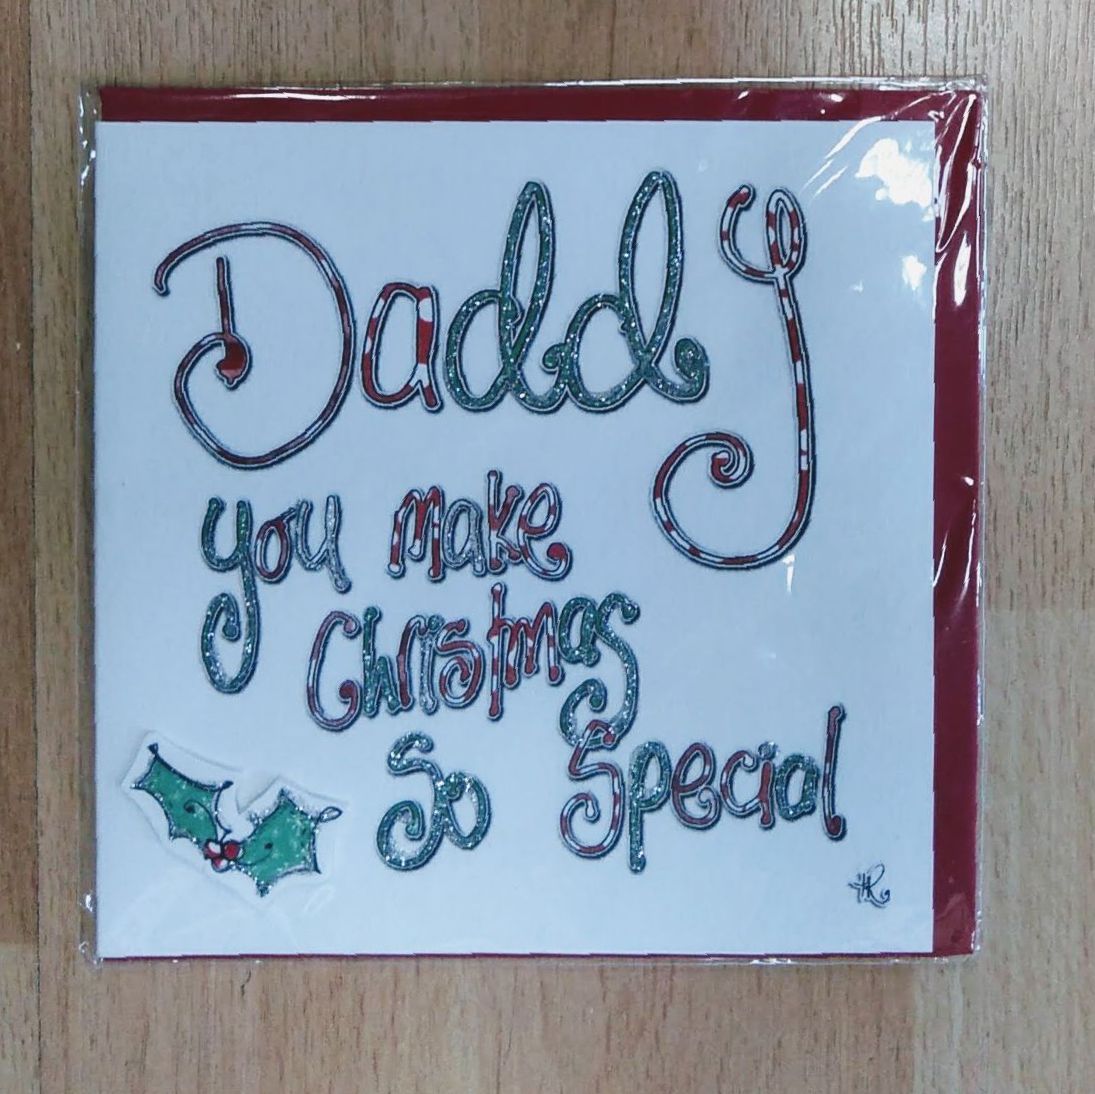 Daddy Christmas Card*